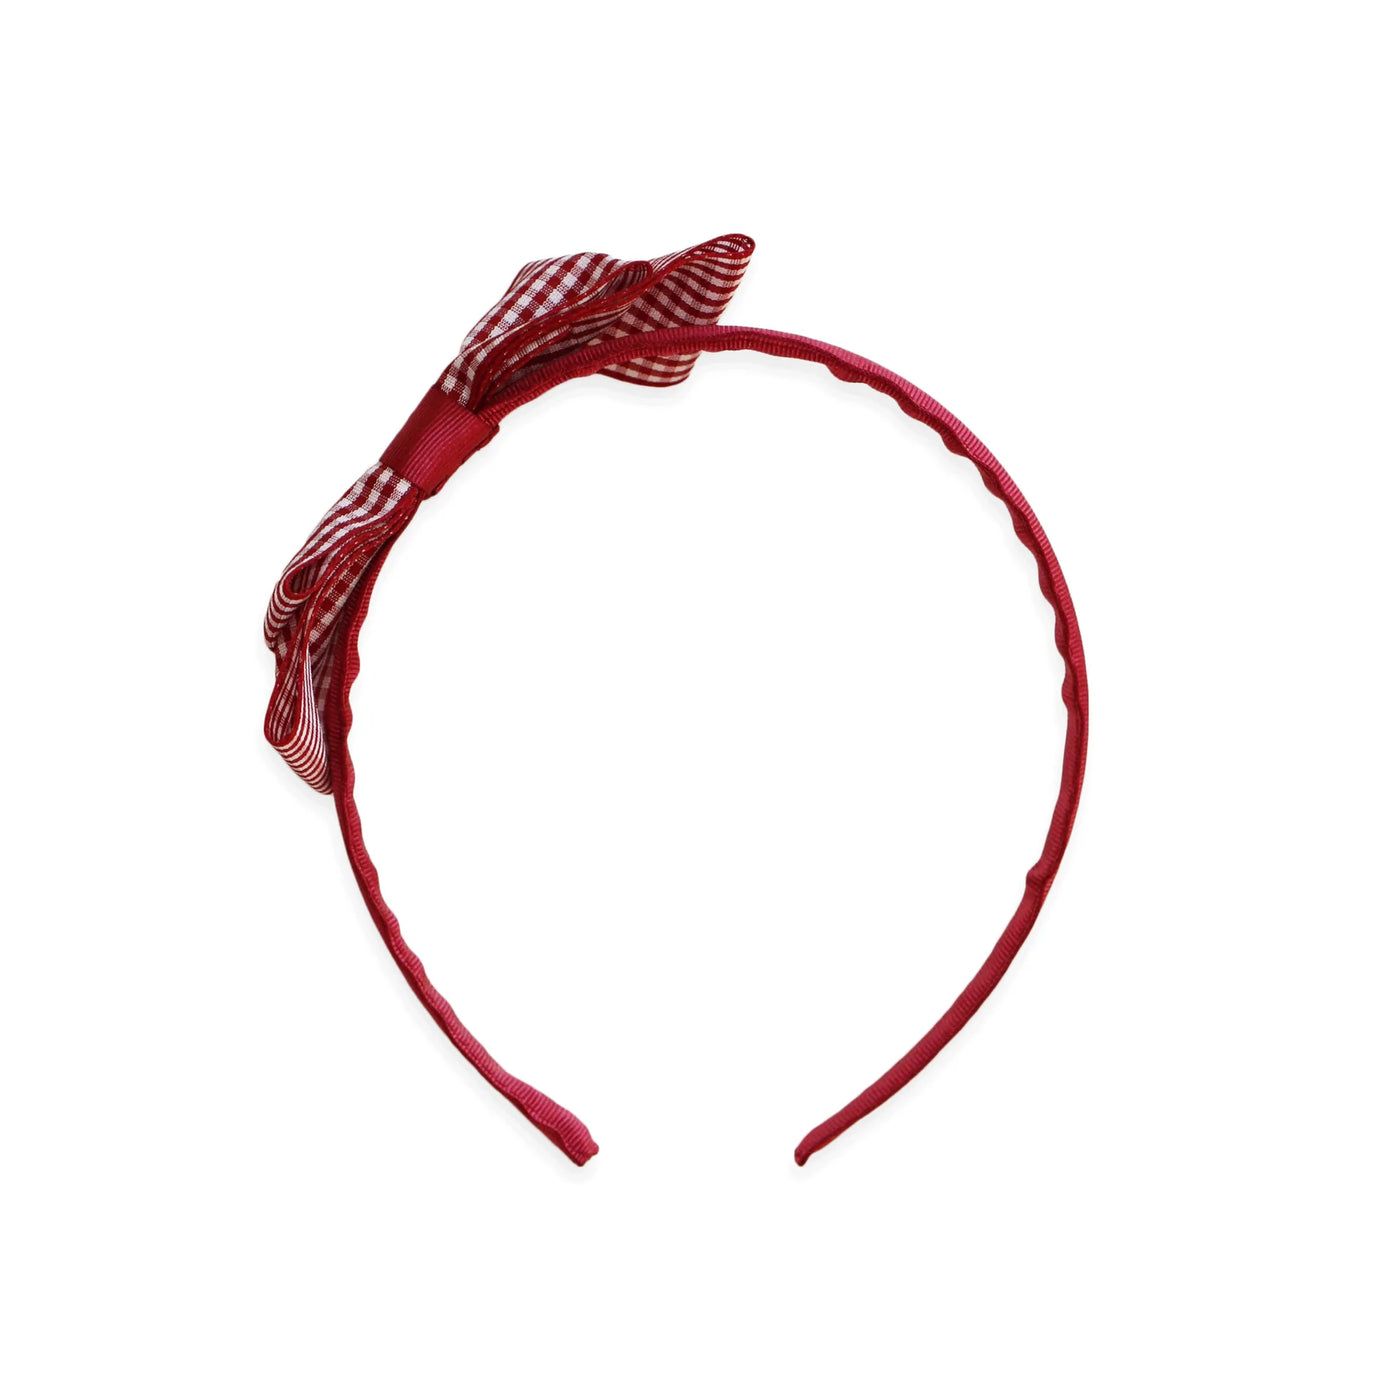 Charlotte headband (6 Colors Available) - Breckenridge Baby